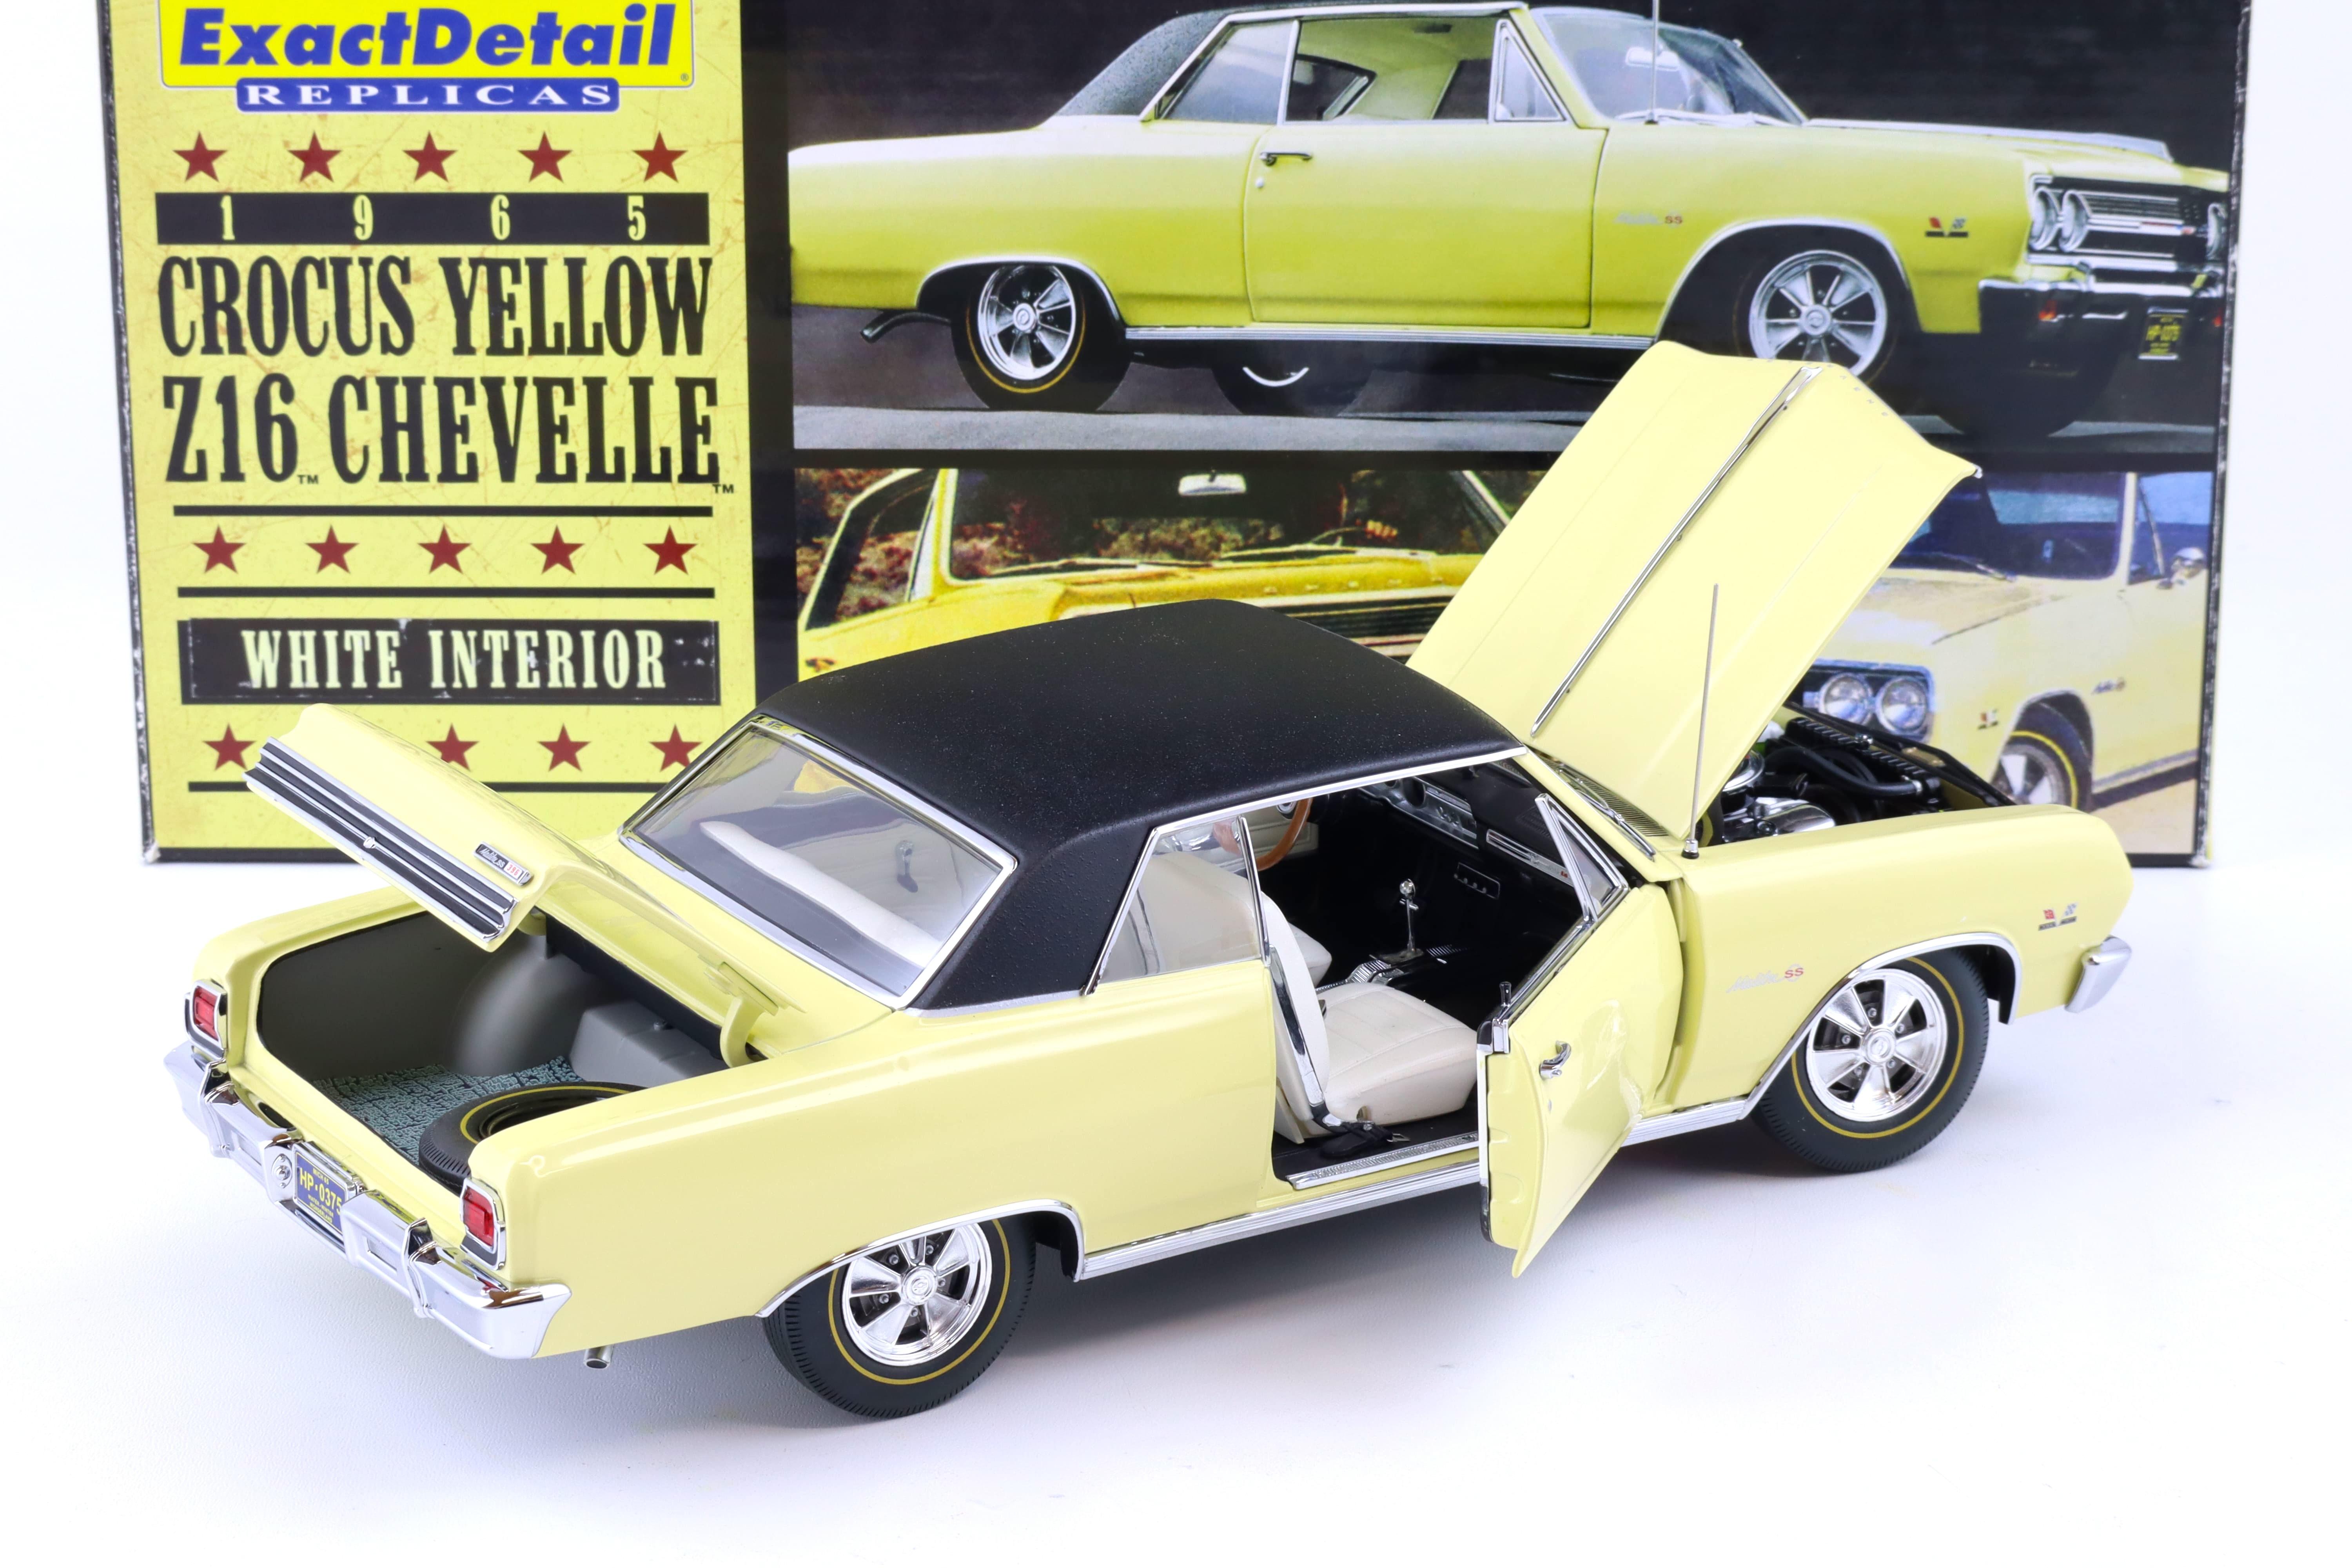 1:18 Exact Detail Chevrolet Chevelle Z16 Malibu SS 396 Turbo Jet Crocus yellow WCC506A